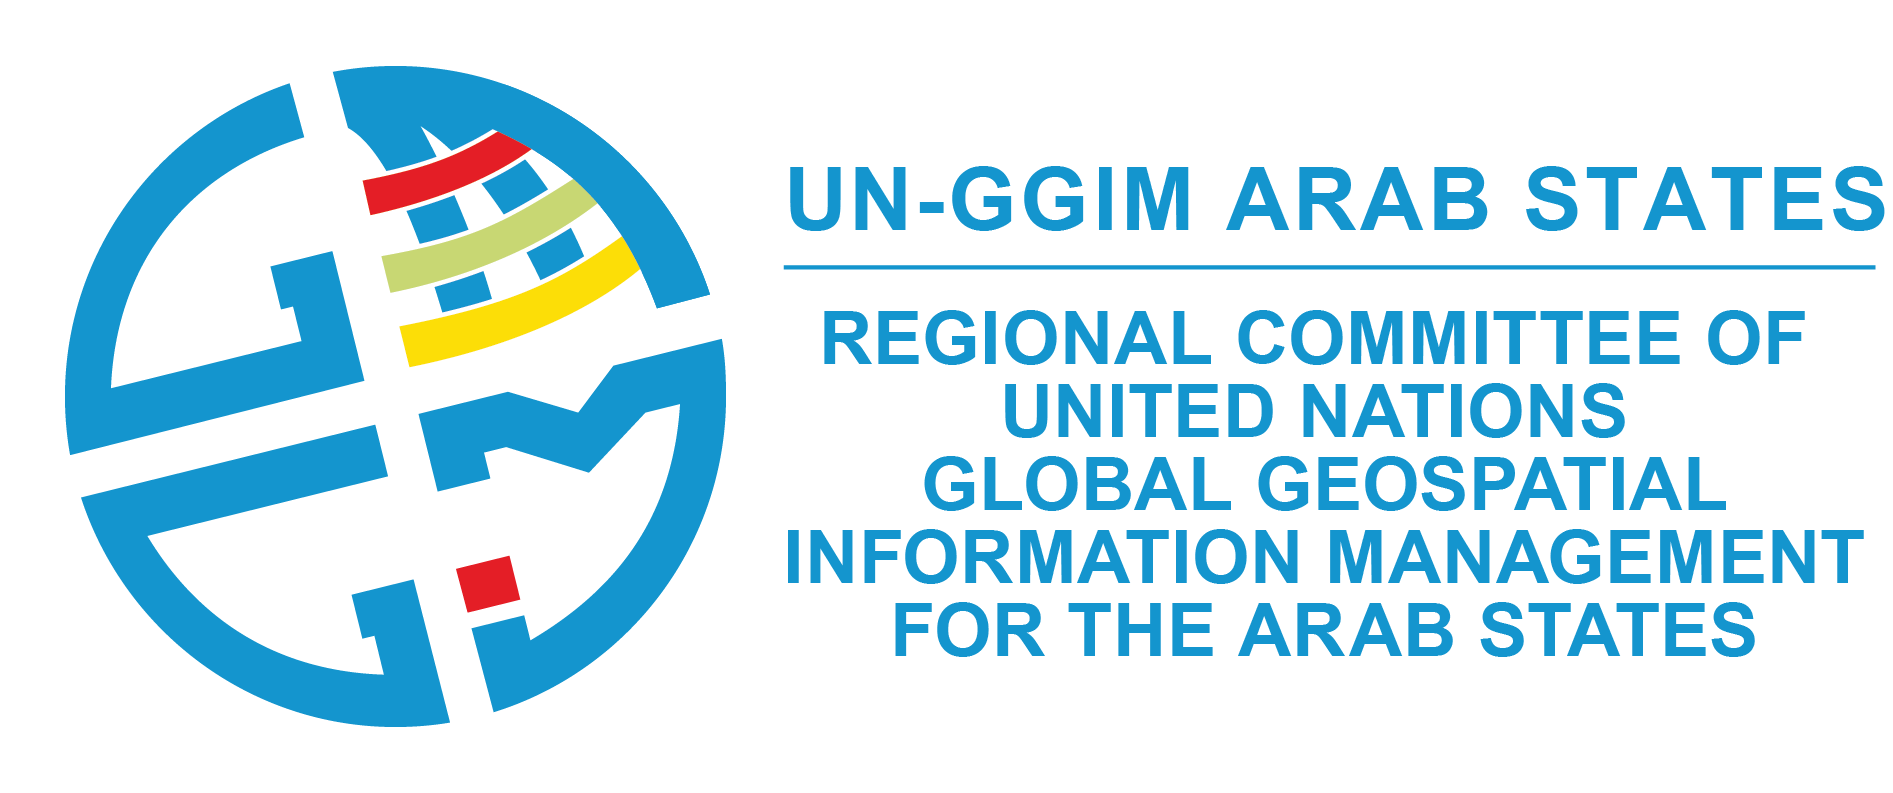 UN-GGIM Arab States